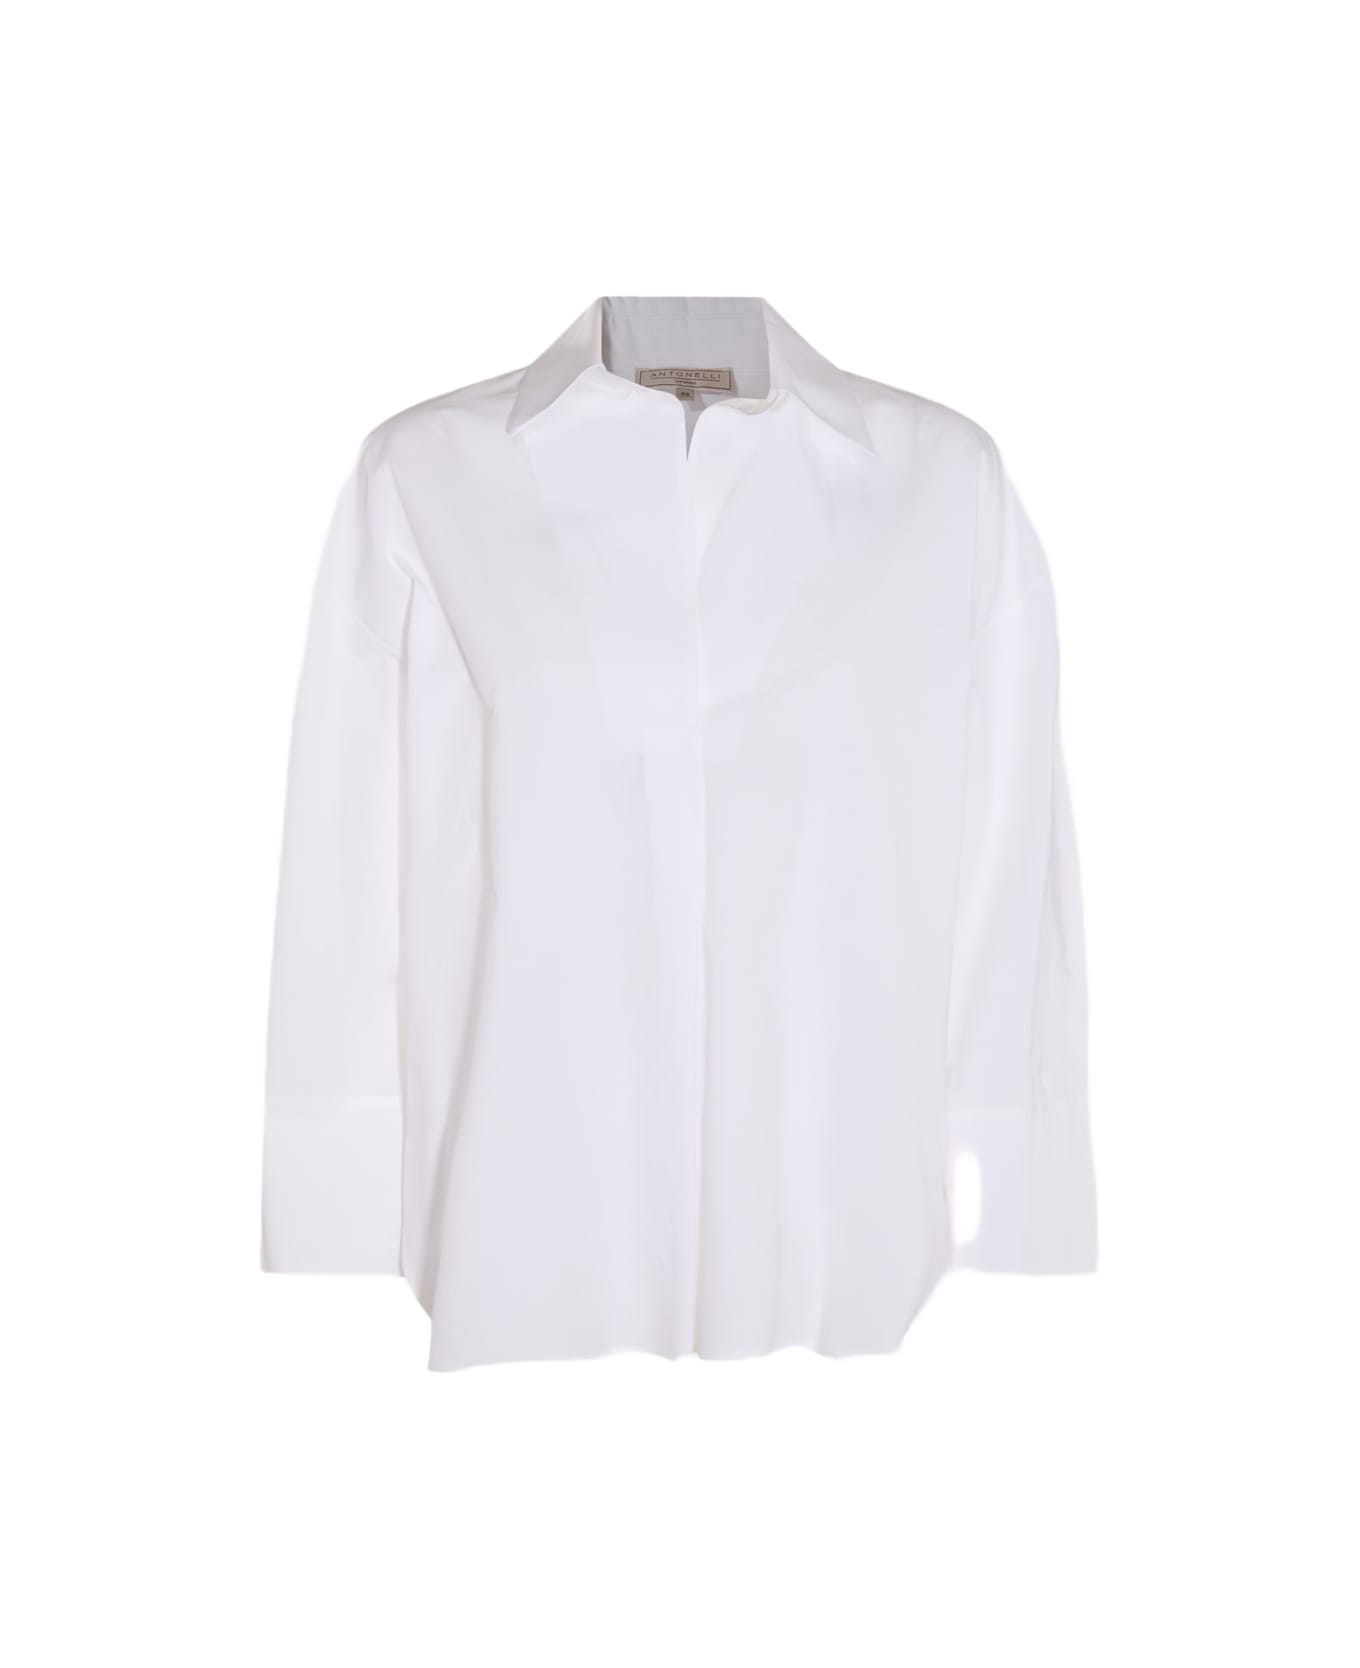 Antonelli White Cotton Shirt - White